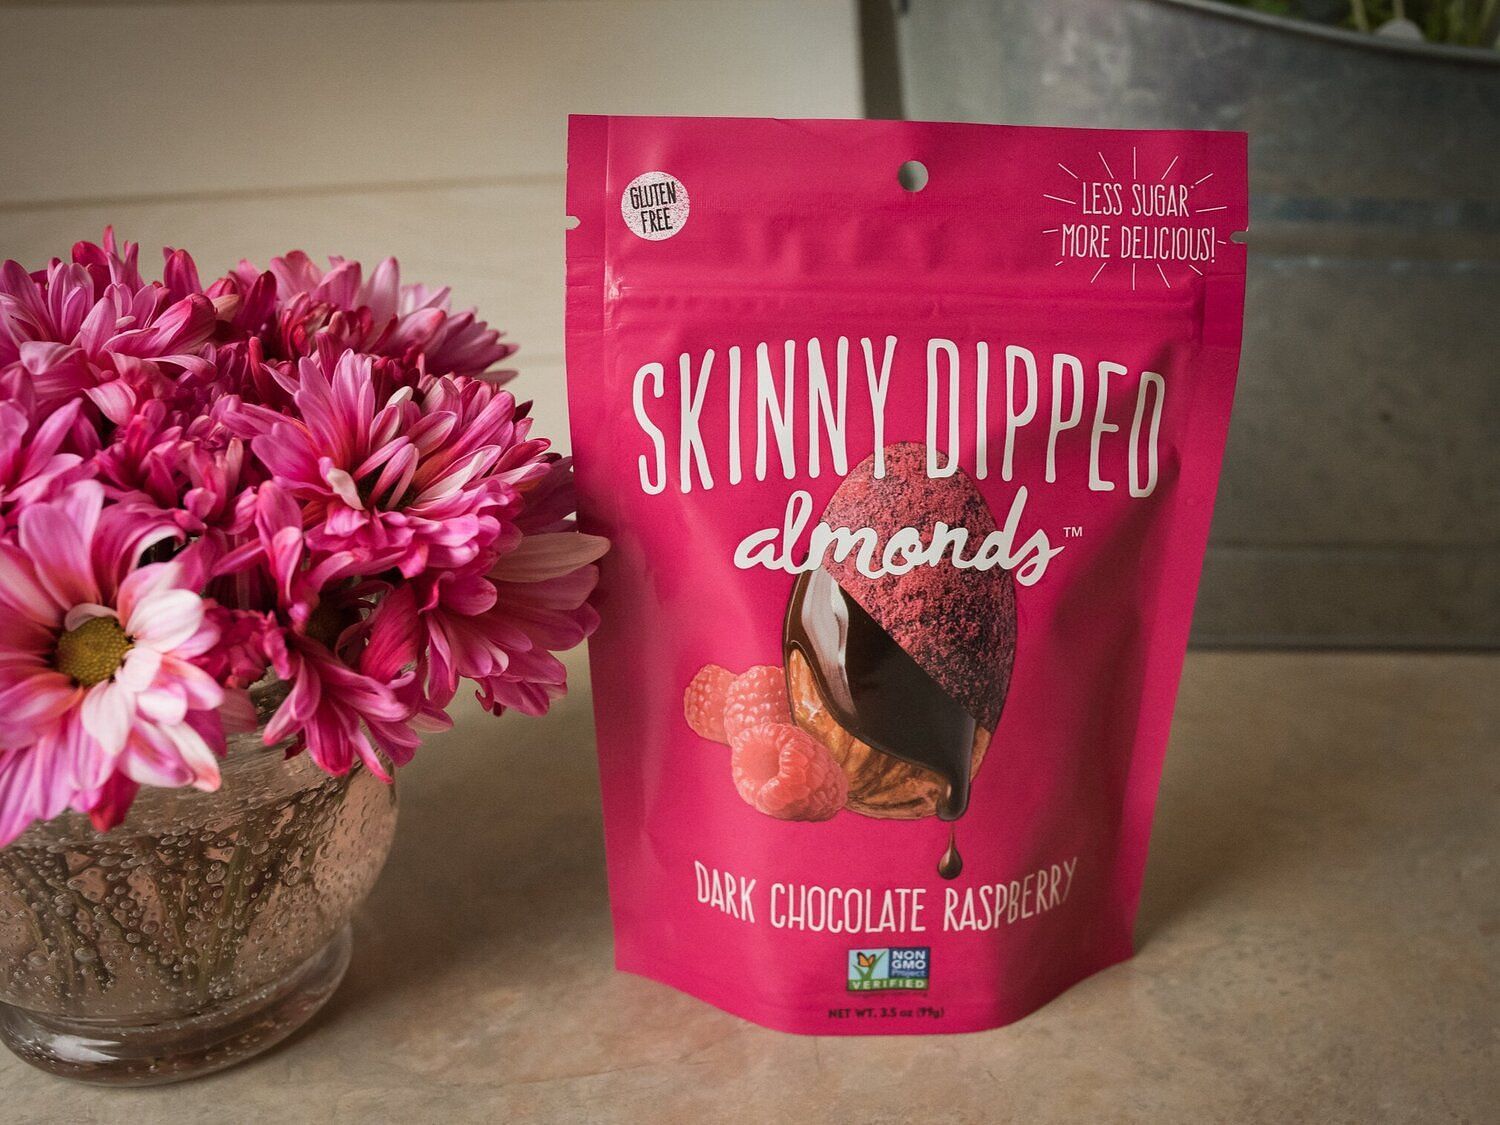 Skinny Dipped Dark Chocolate Raspberry Almonds (Image sourced via: www.itsmeglutenfree.com)